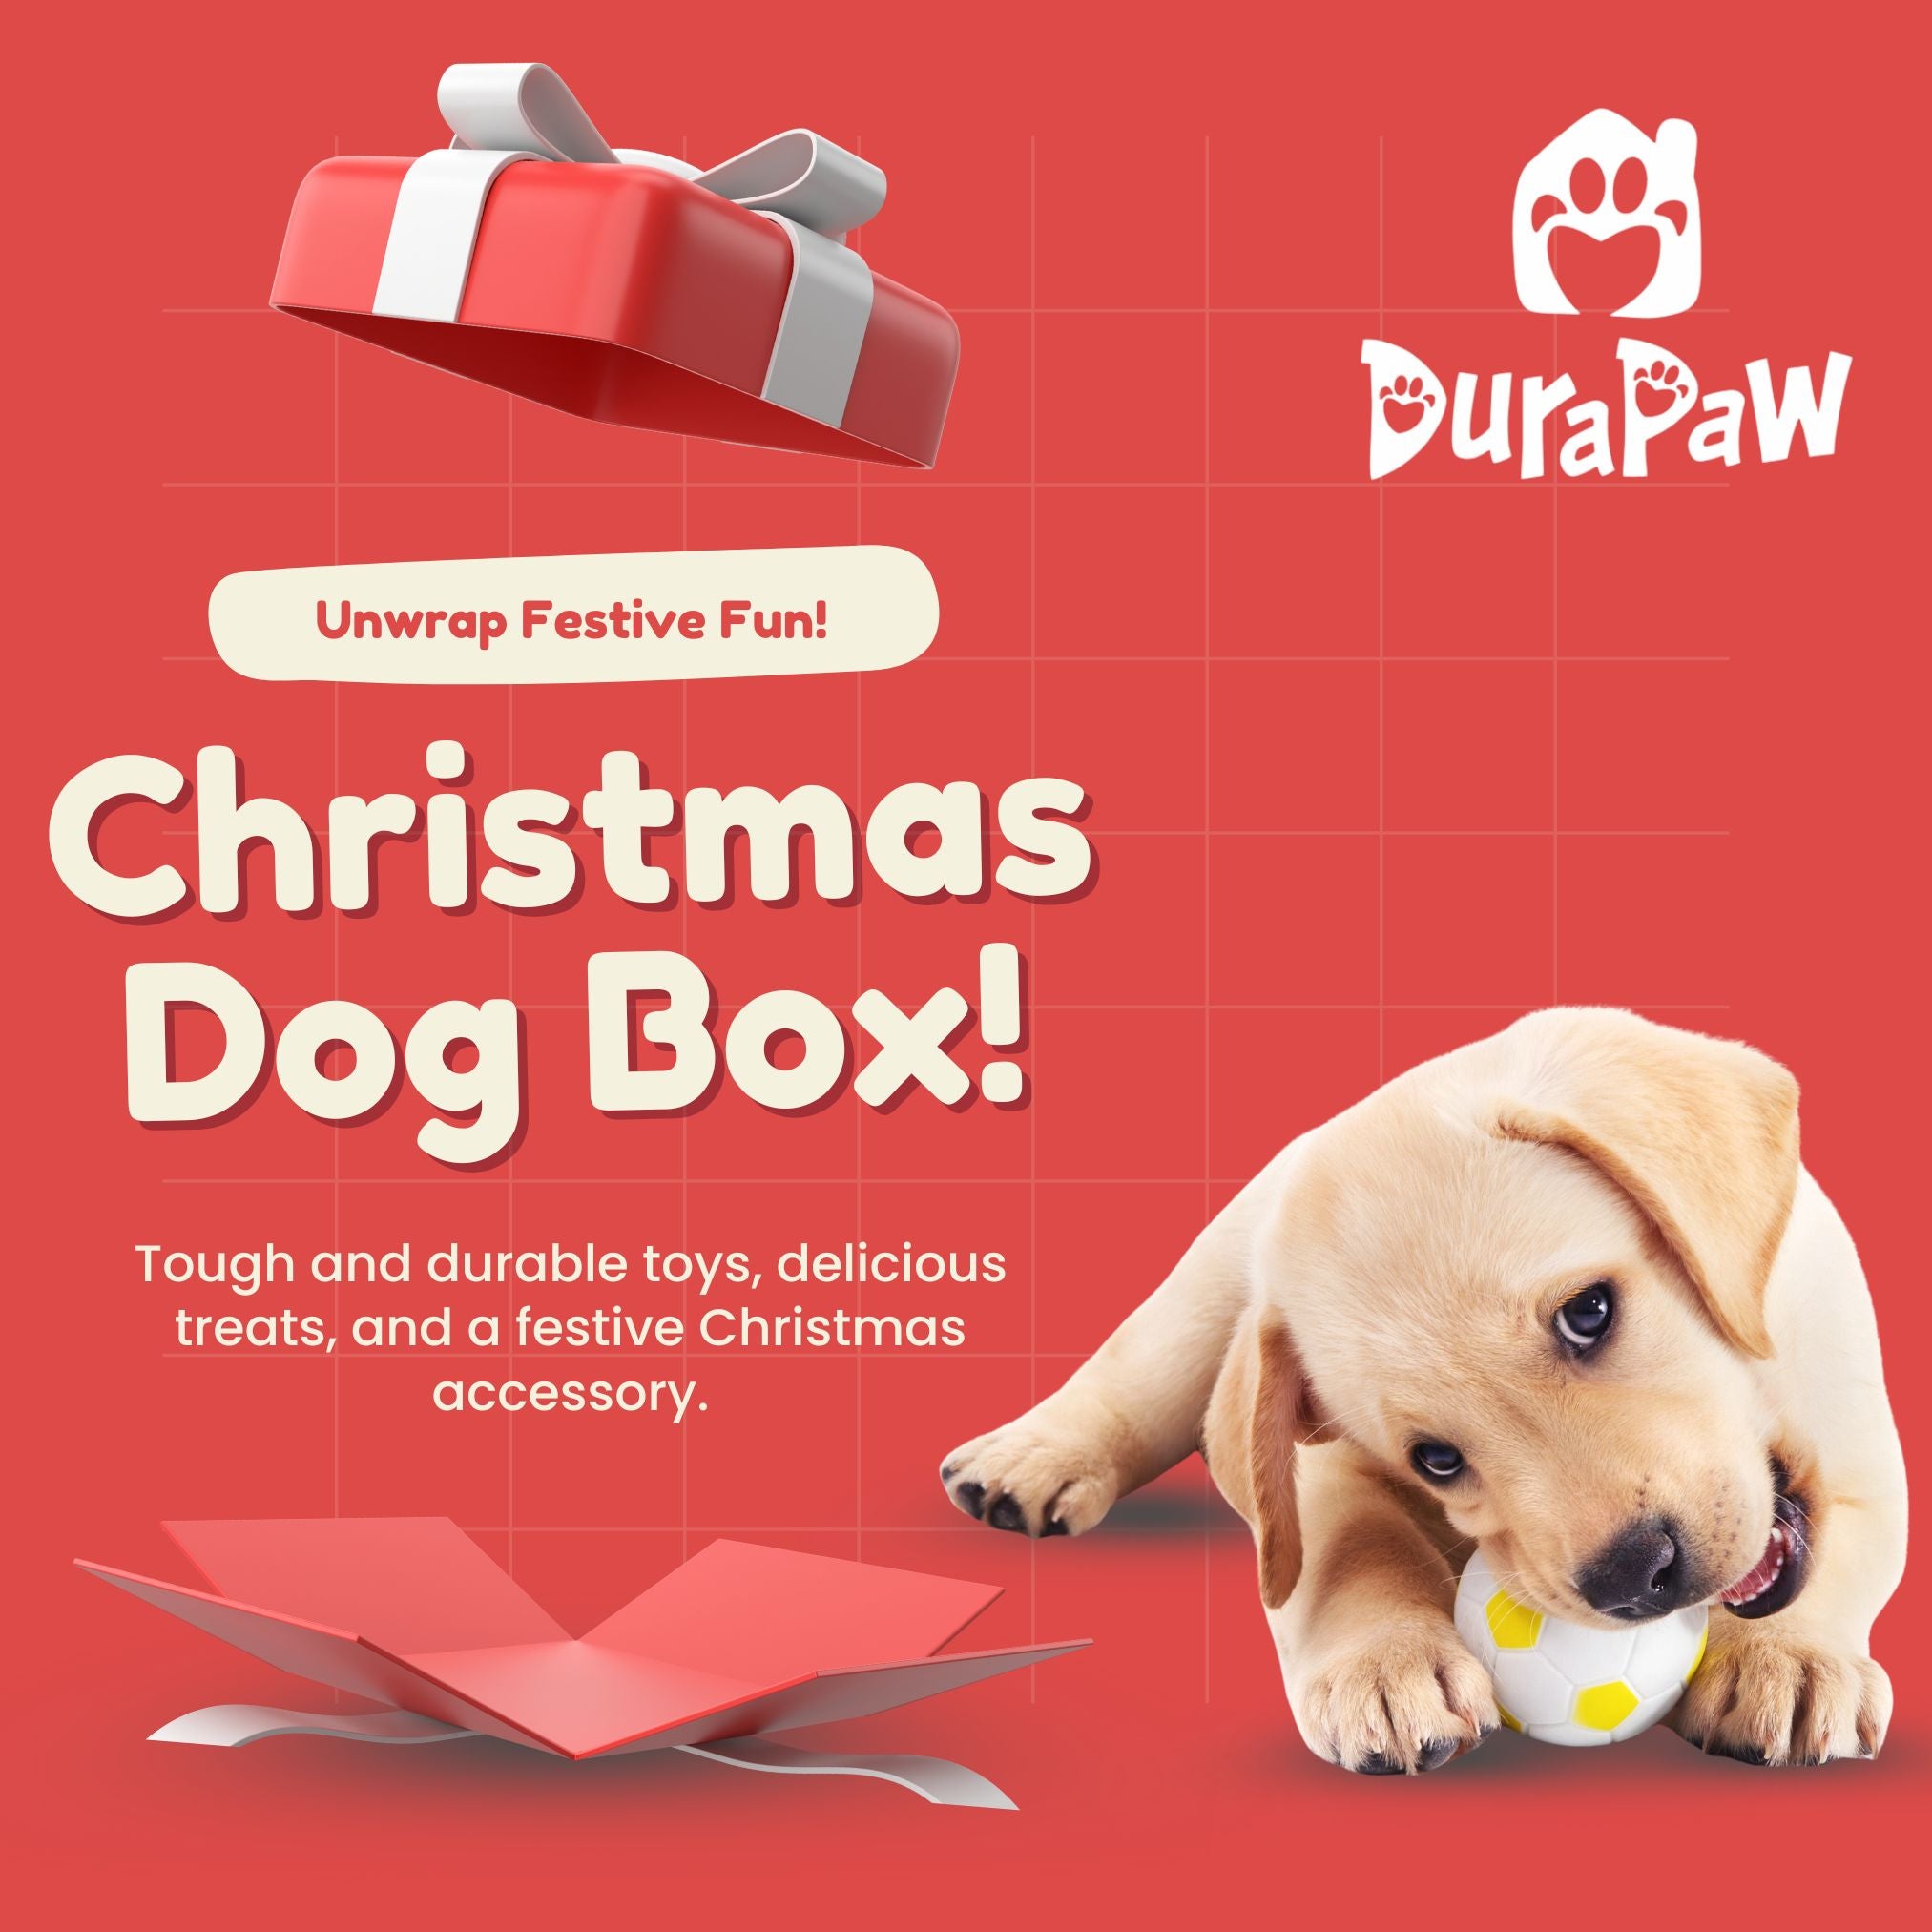 Christmas Dog Box With Dog Chewing on Ball